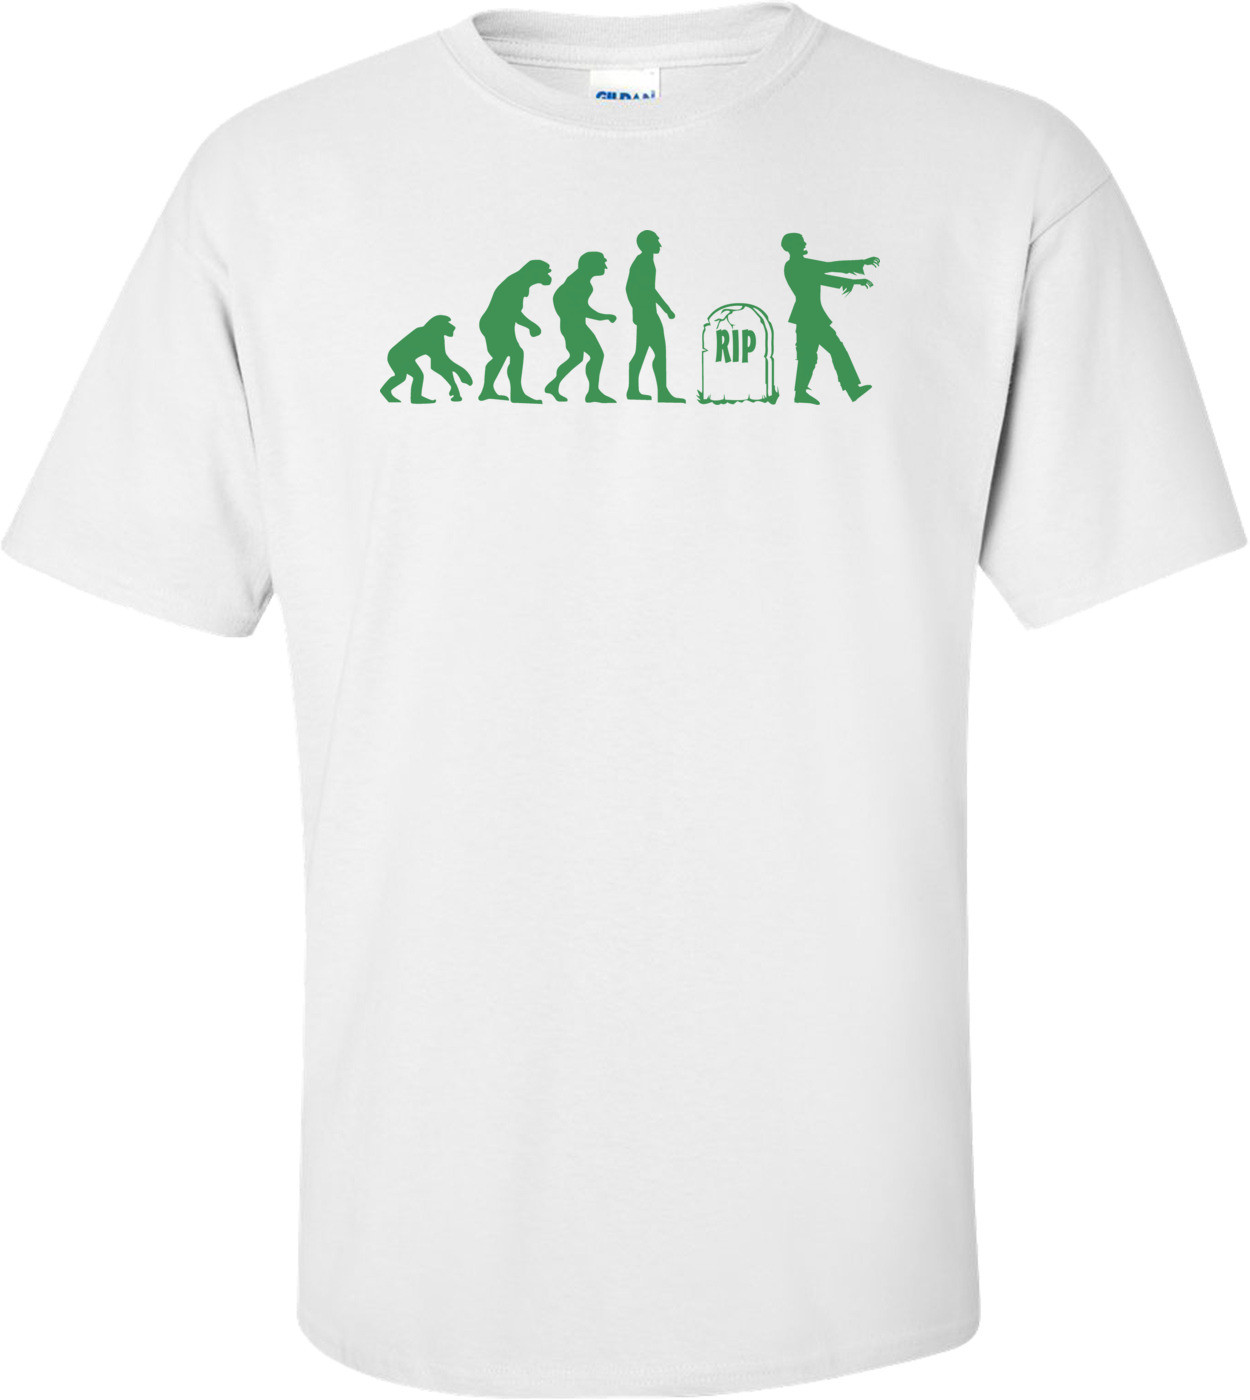 Zombie Evolution - Cool Zombie Shirt